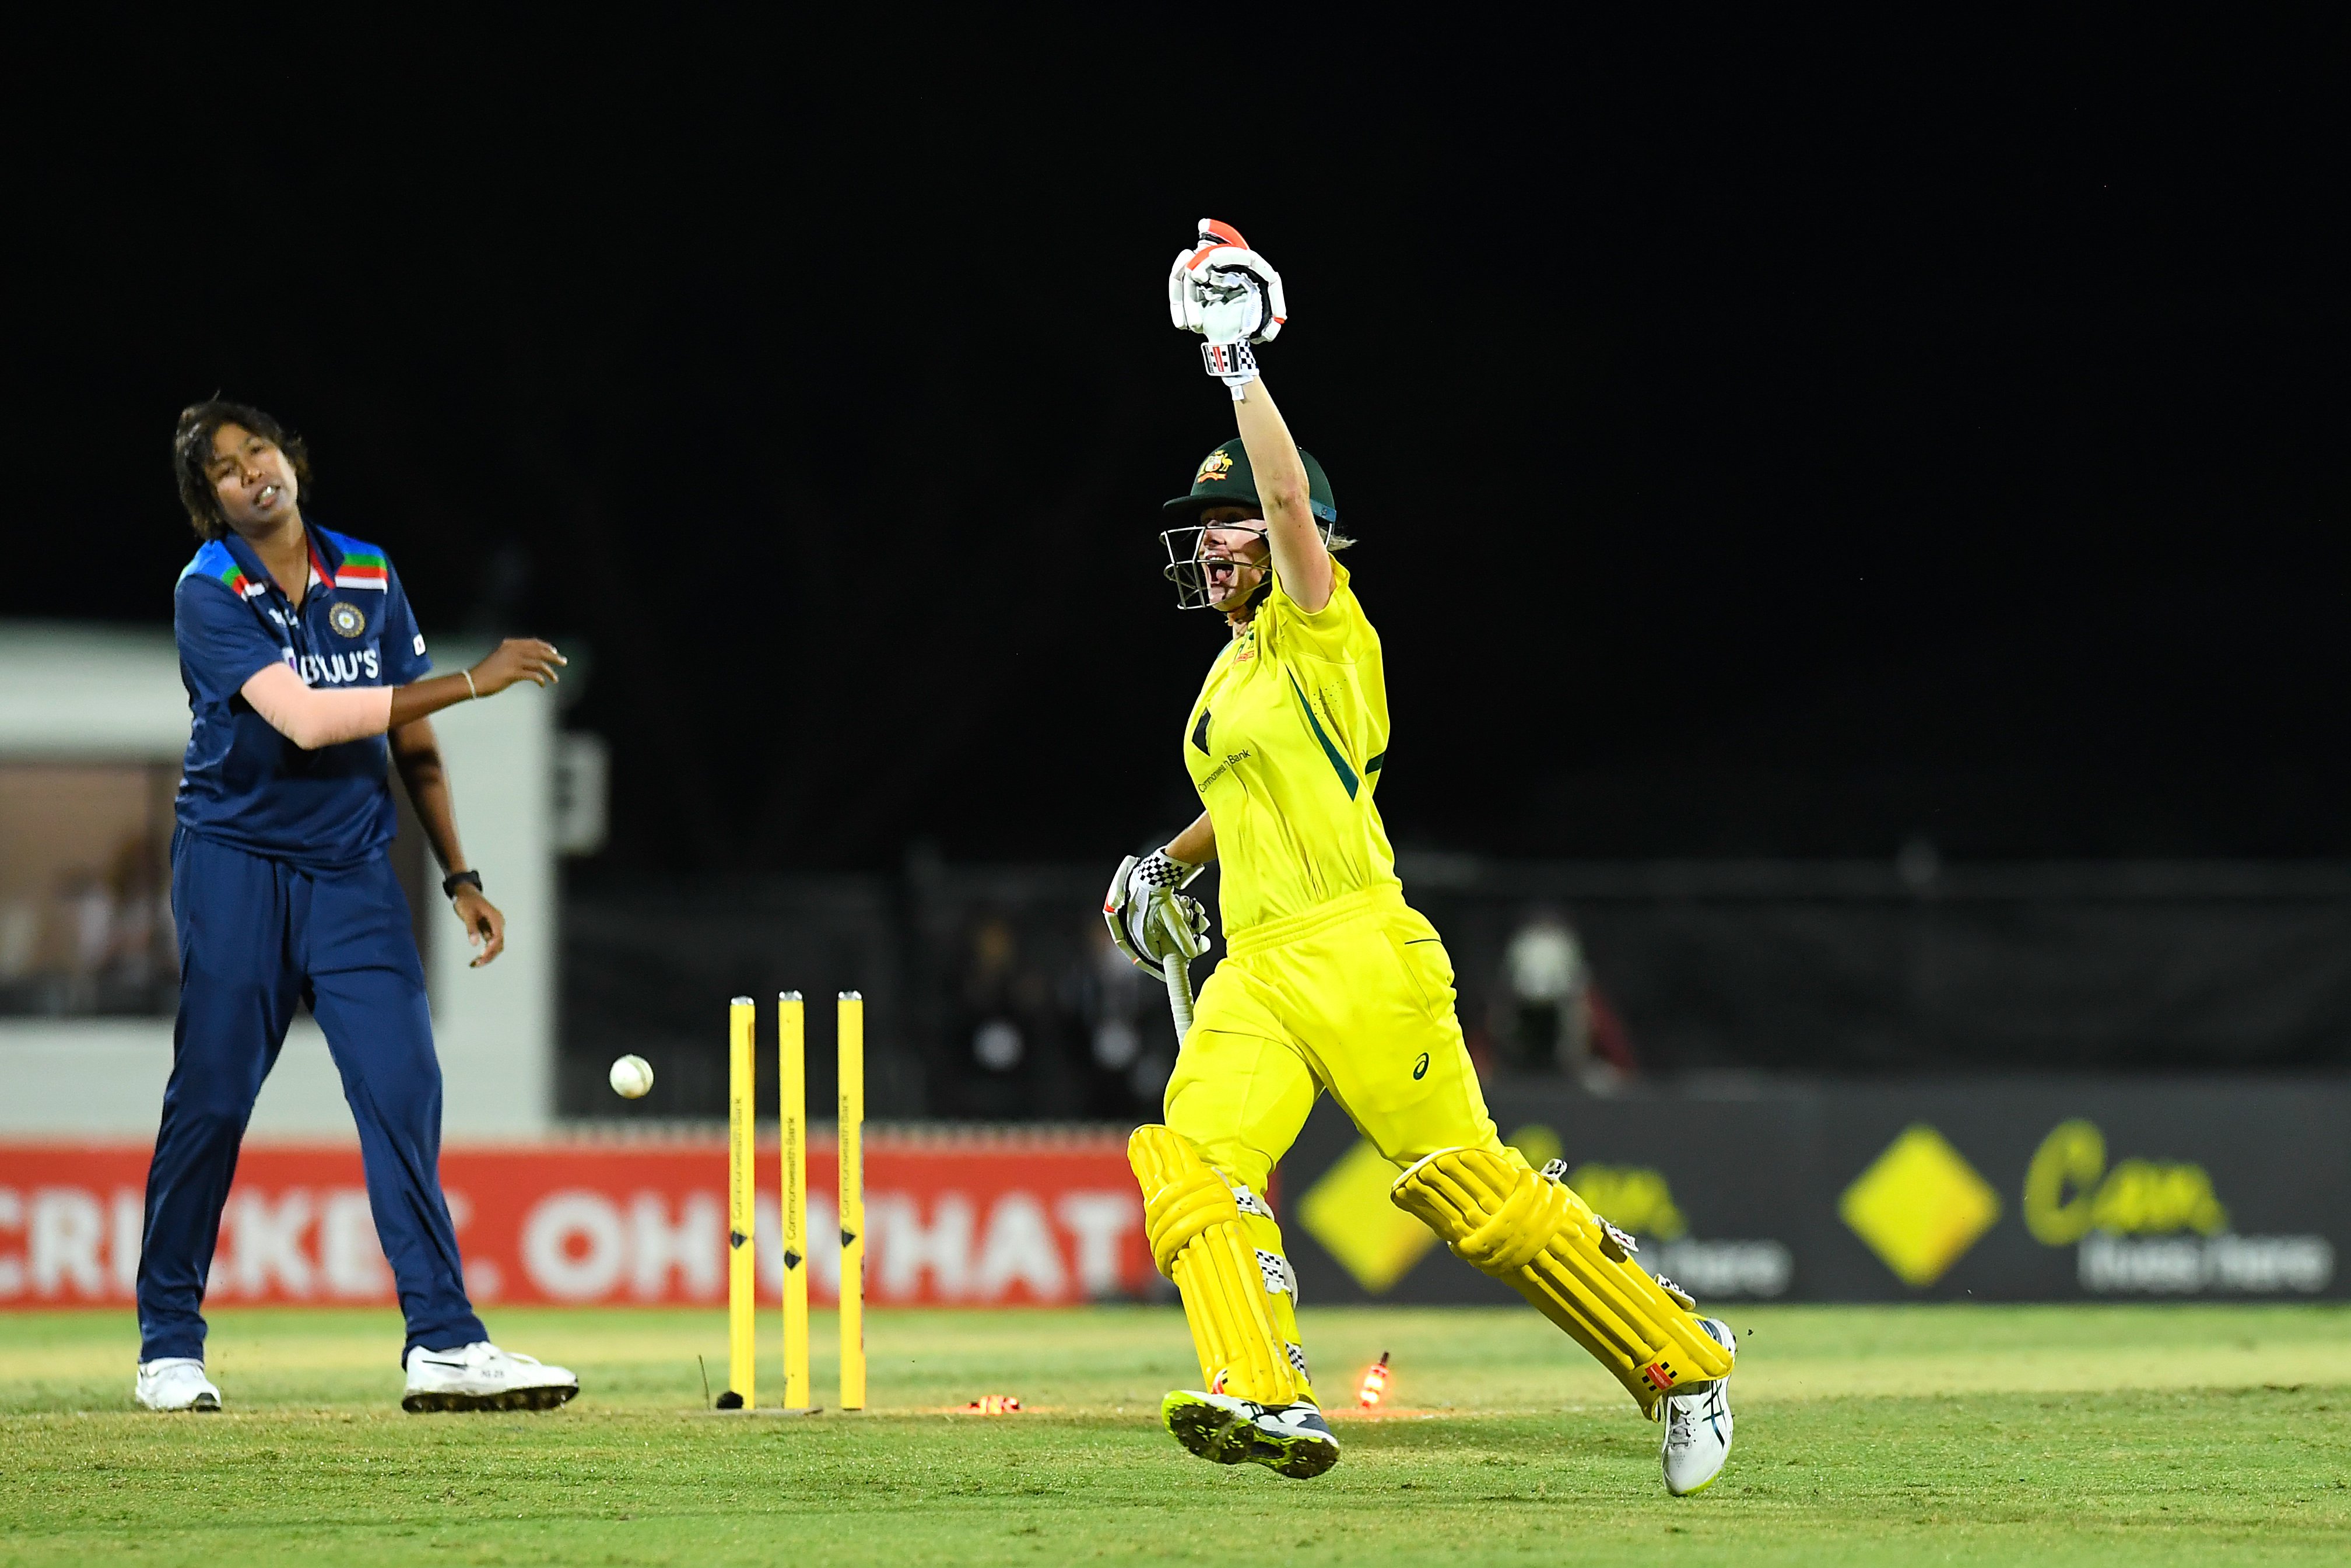 AUSW vs INDW | Australia defeat India by 5 wickets to clinch record 26th successive ODI victory